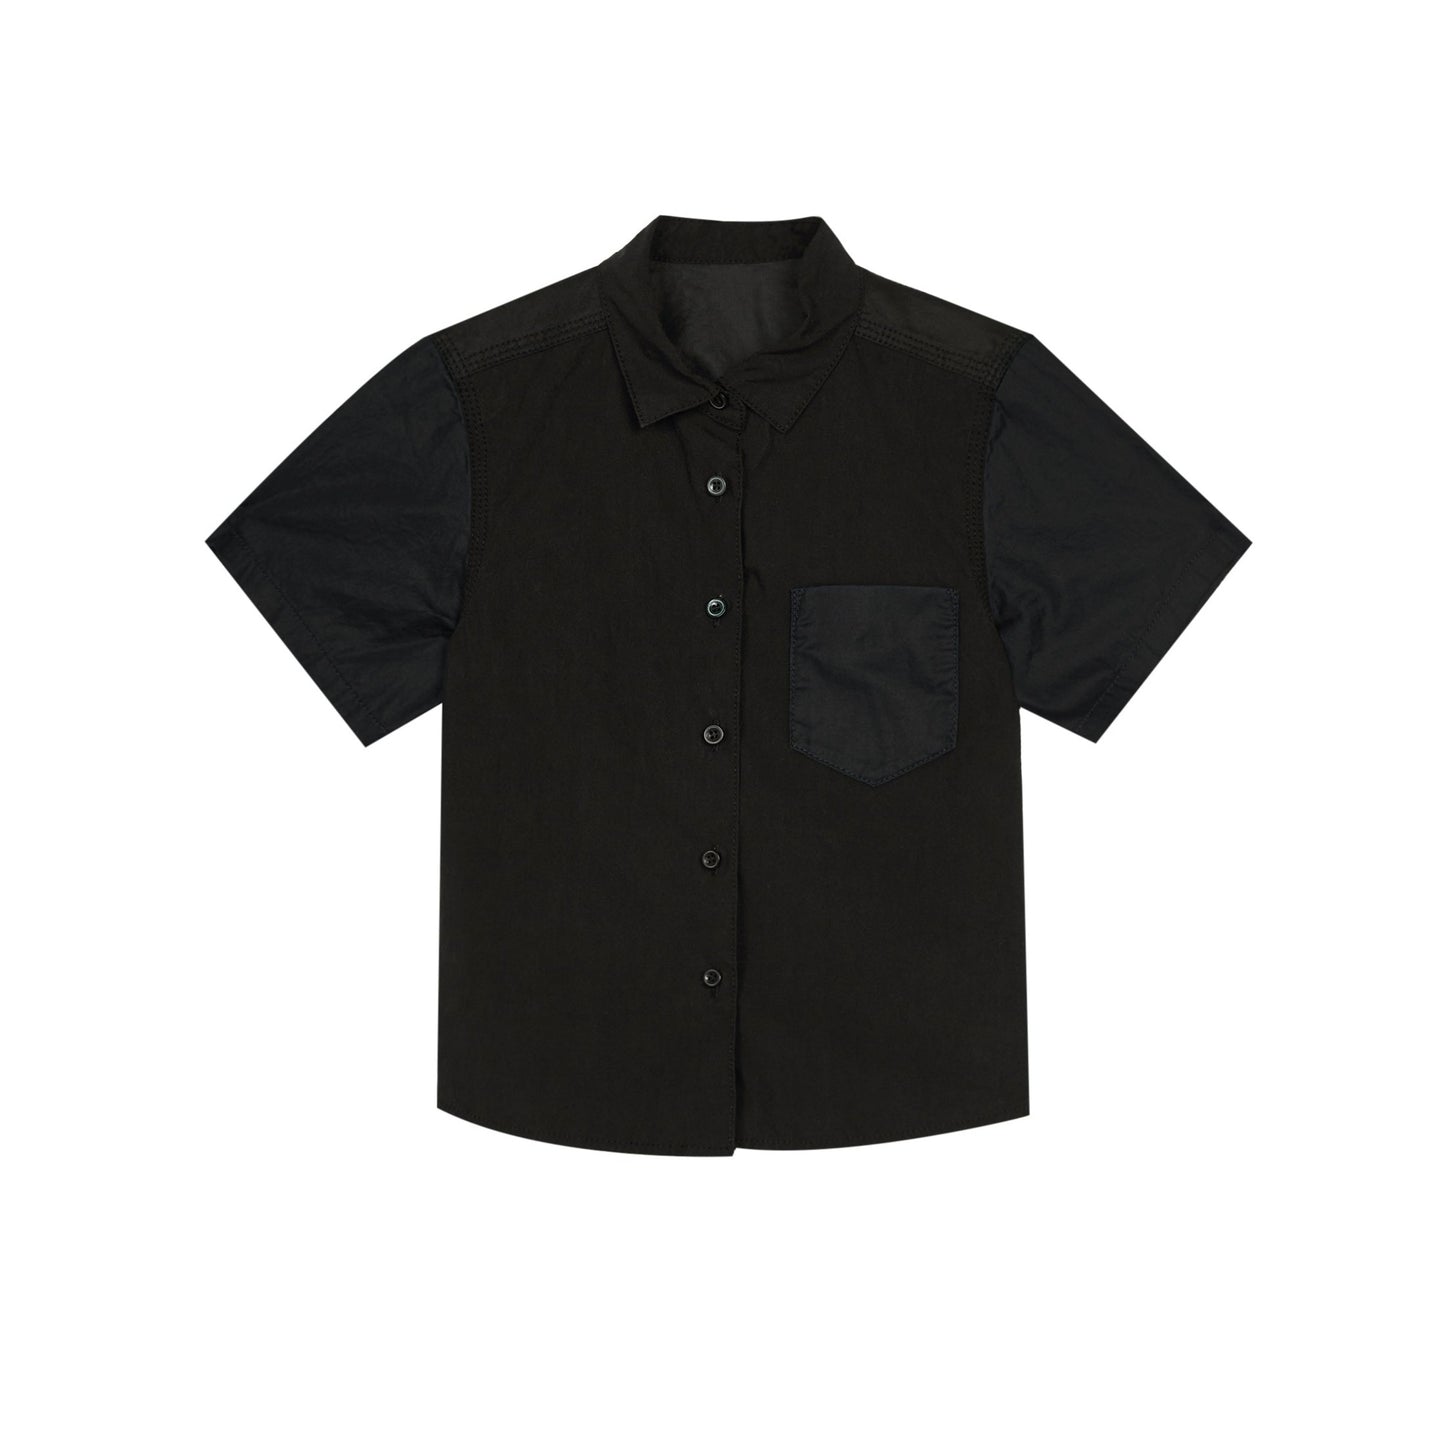 JNBY Boys S/S Button Up Shirt _Black 1M3253090-001